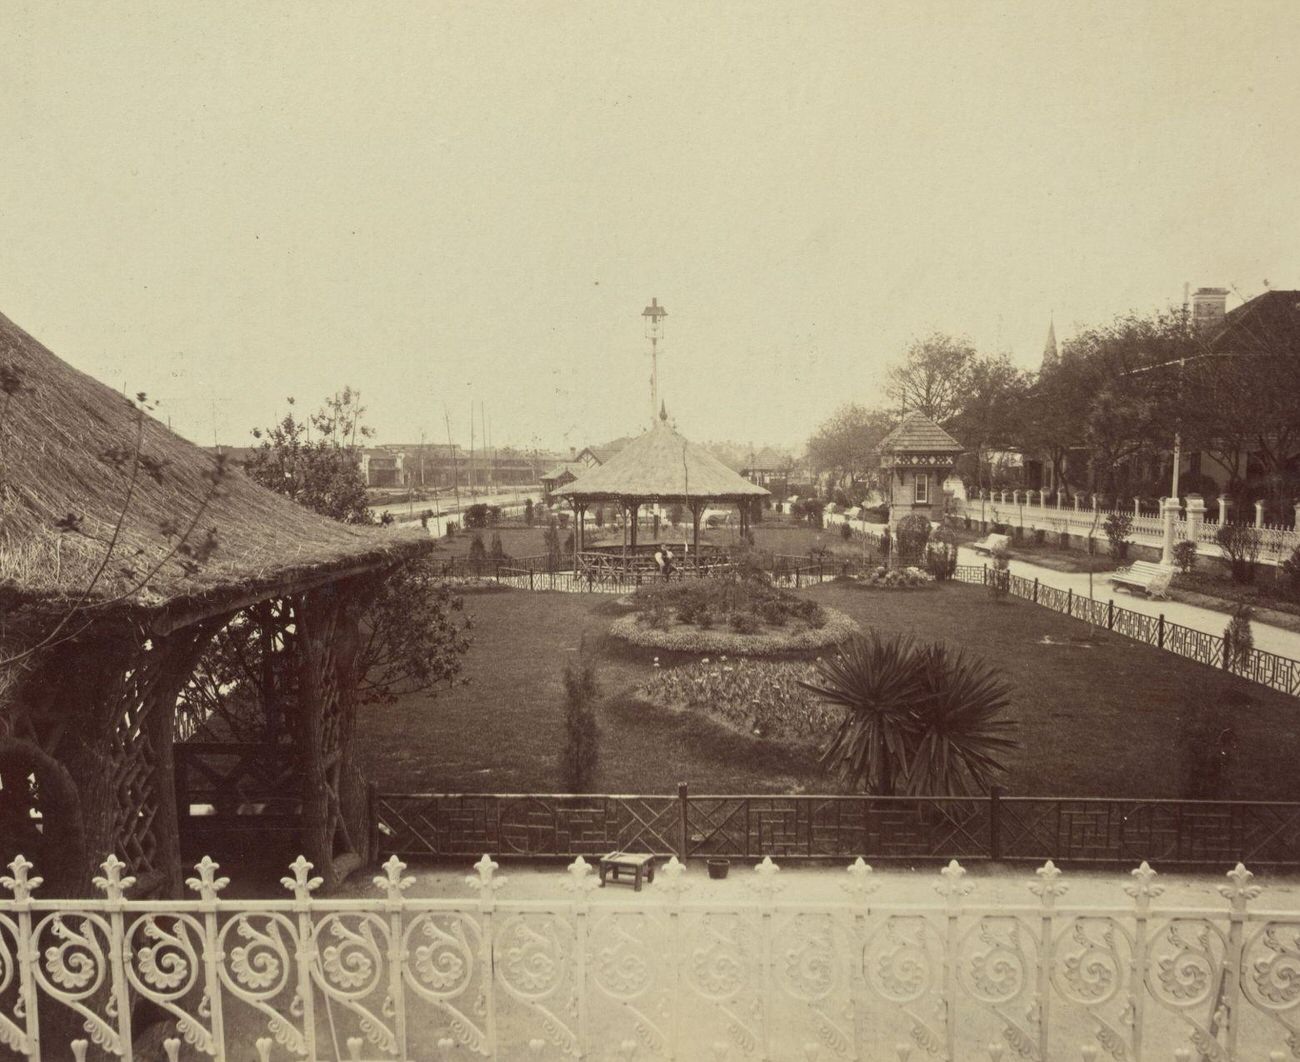 Public Gardens, Shanghai, 1870s